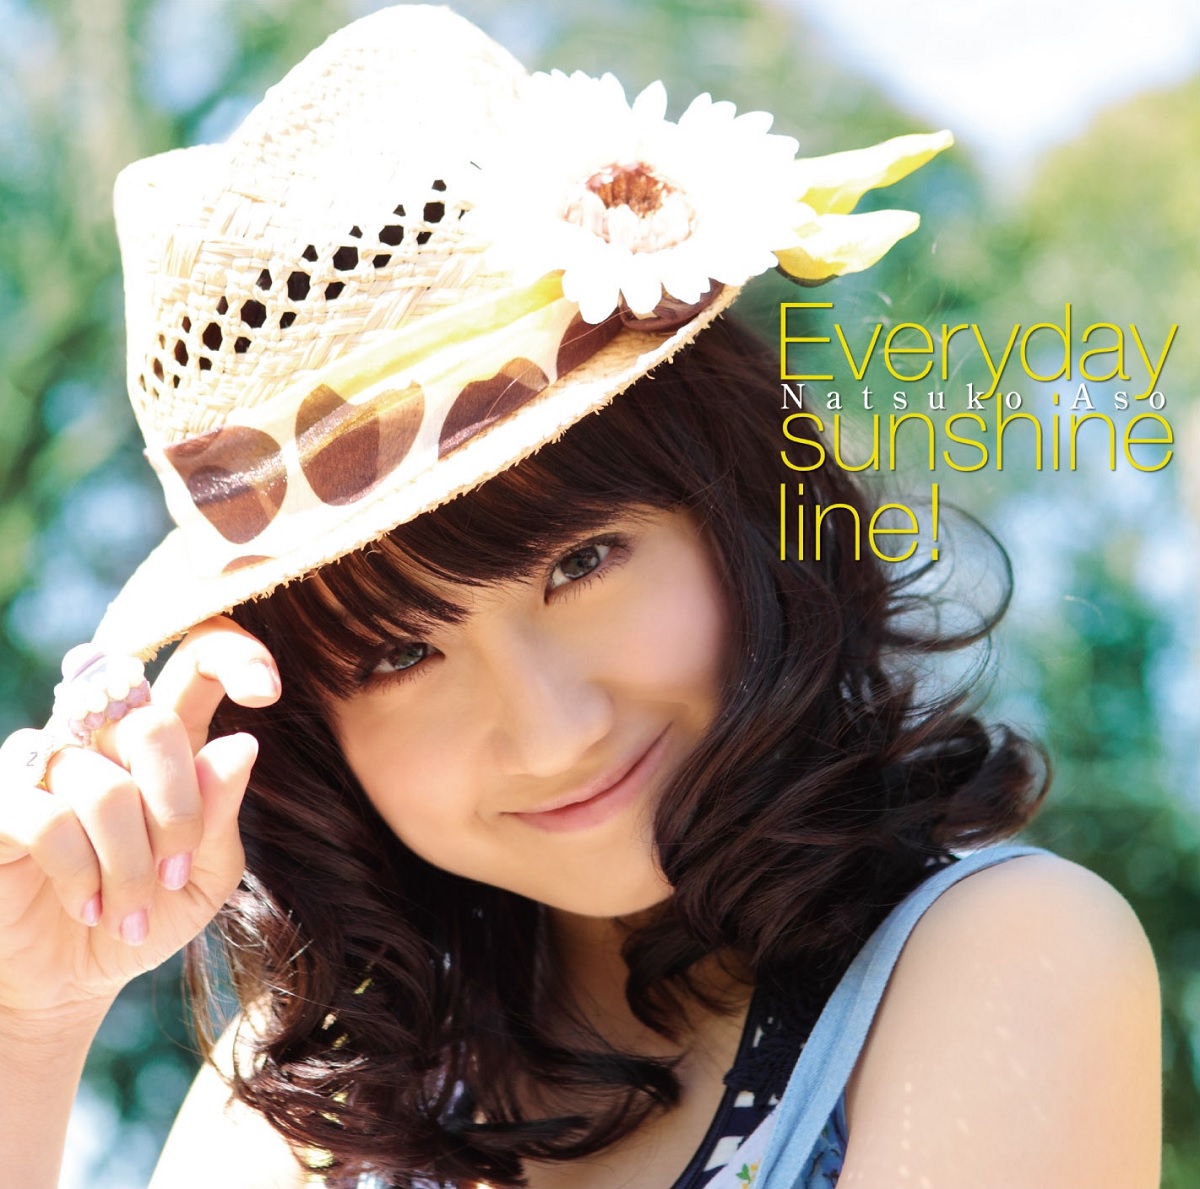 Cover art for『Natsuko Aso - Everyday sunshine line!』from the release『Everyday sunshine line!